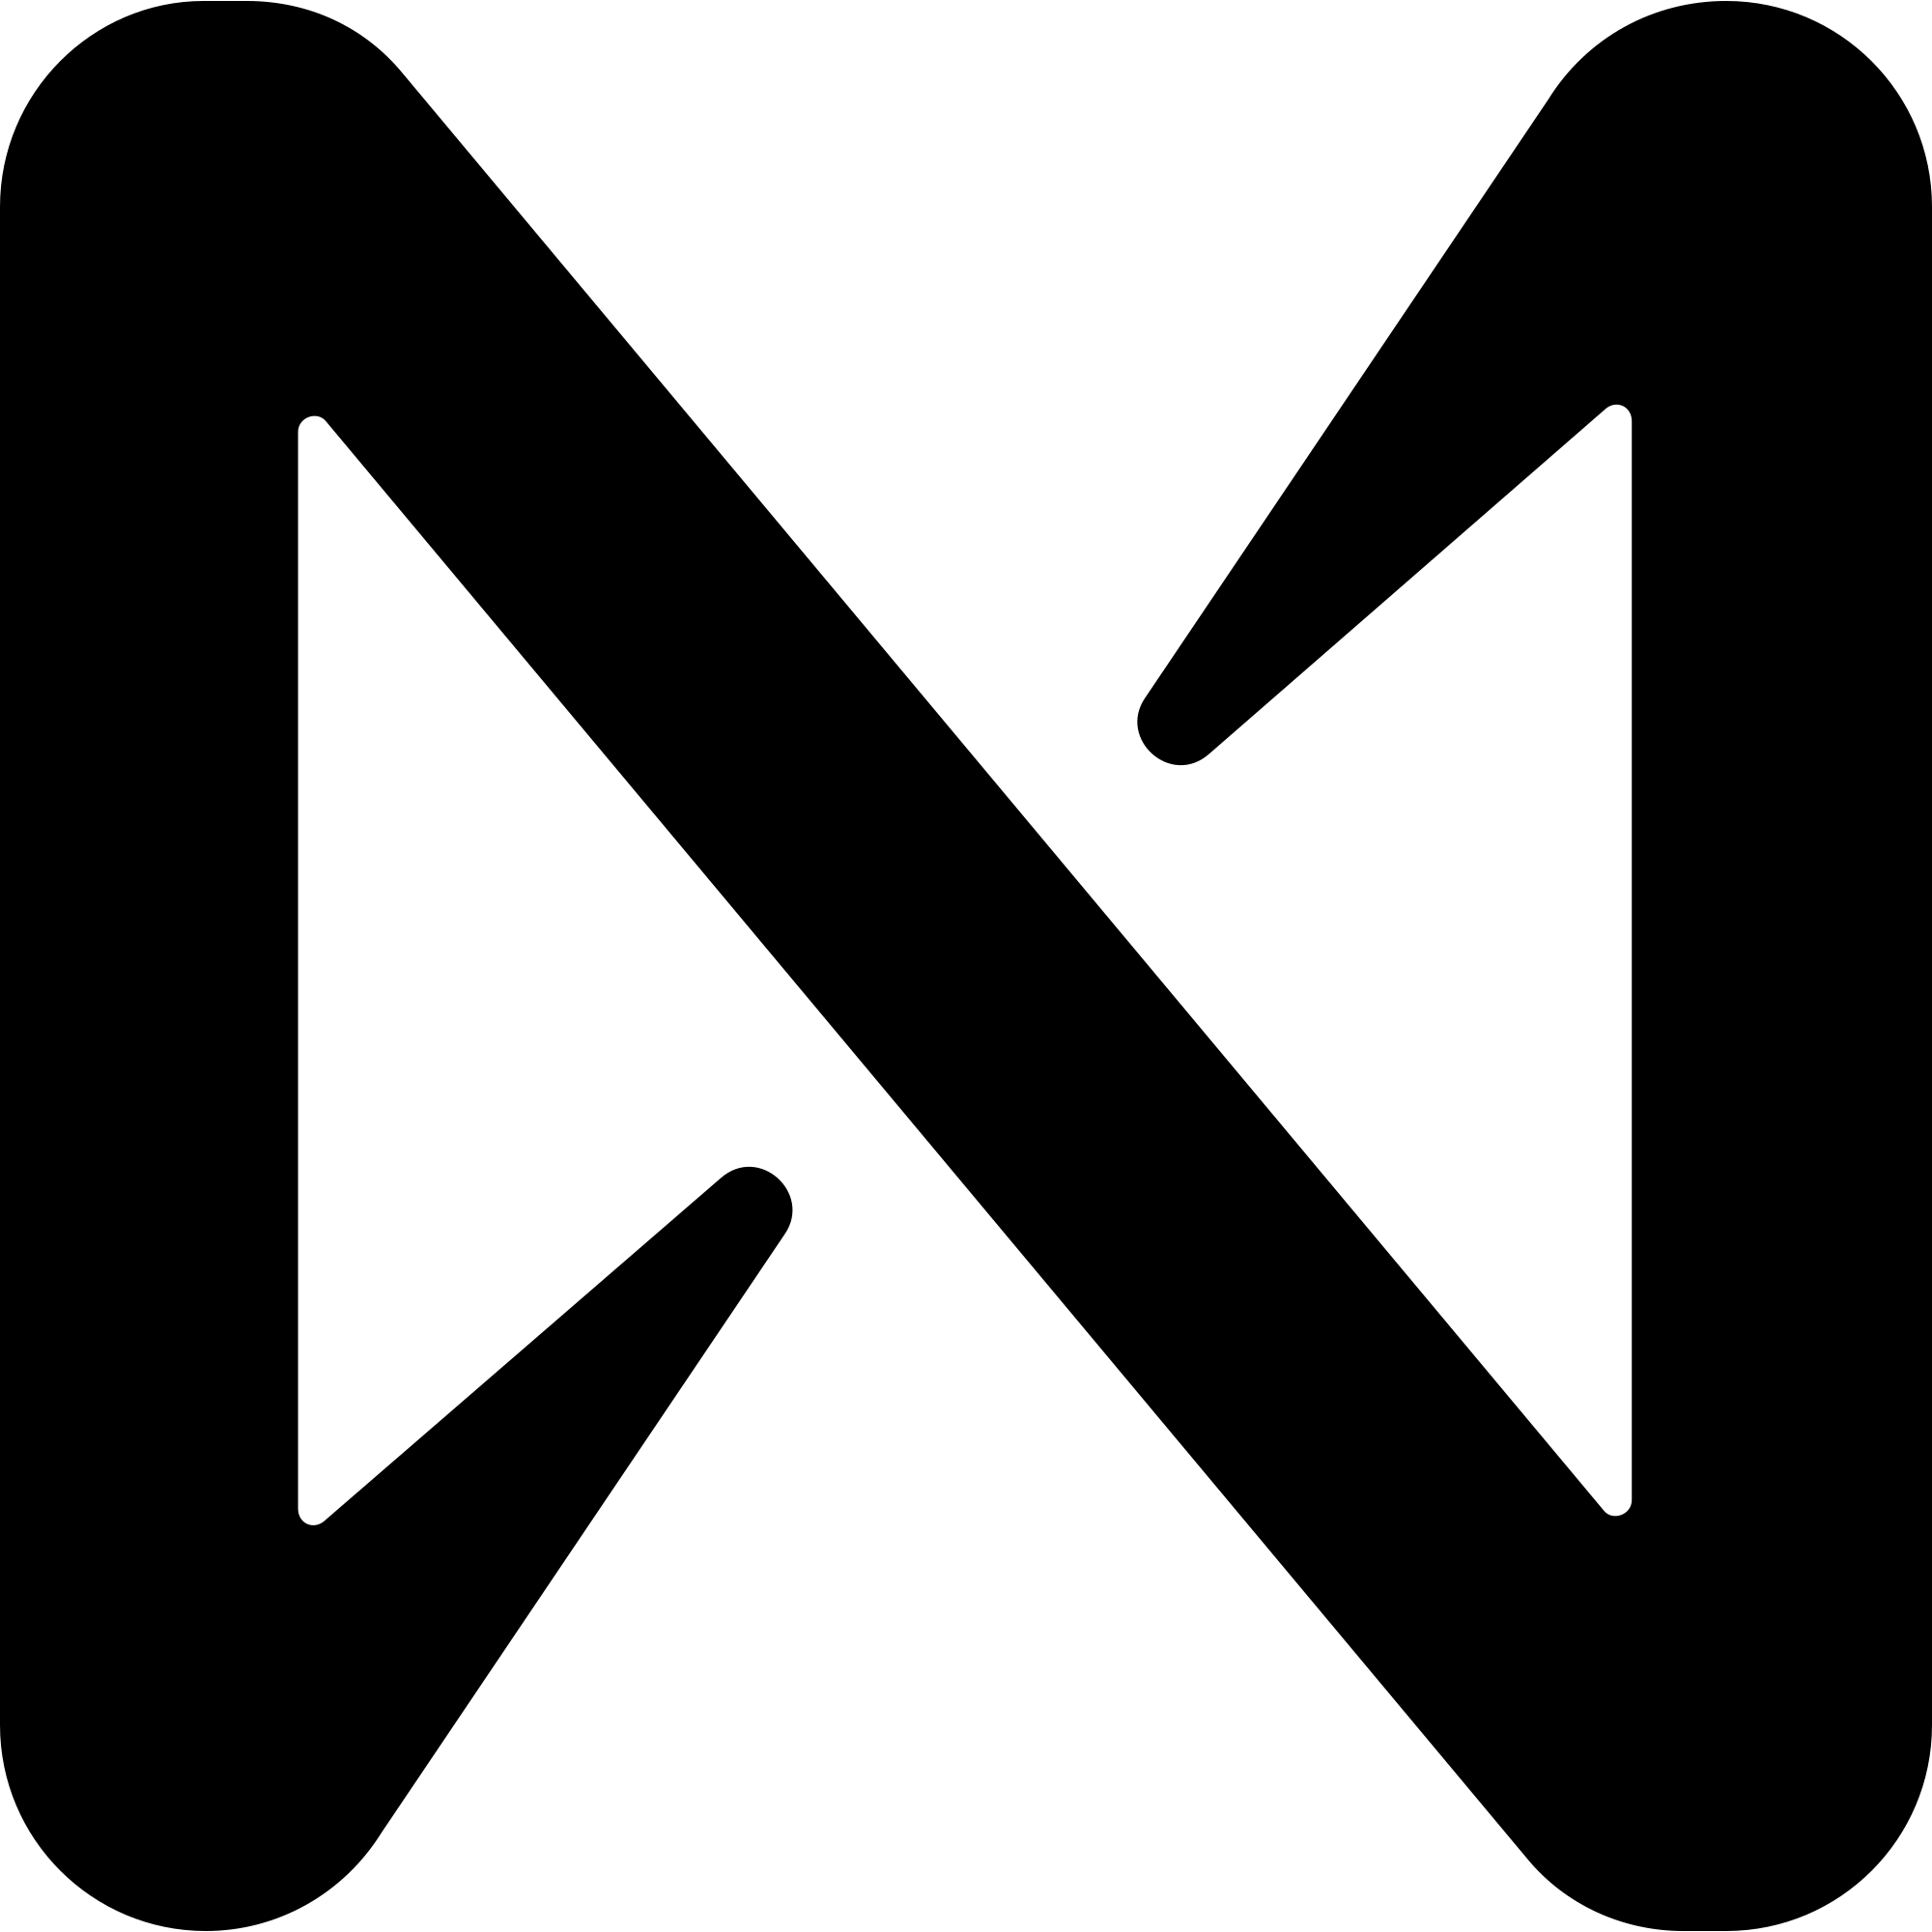 NEAR Protocol (NEAR) Logo Transparent - PNG File Free Download